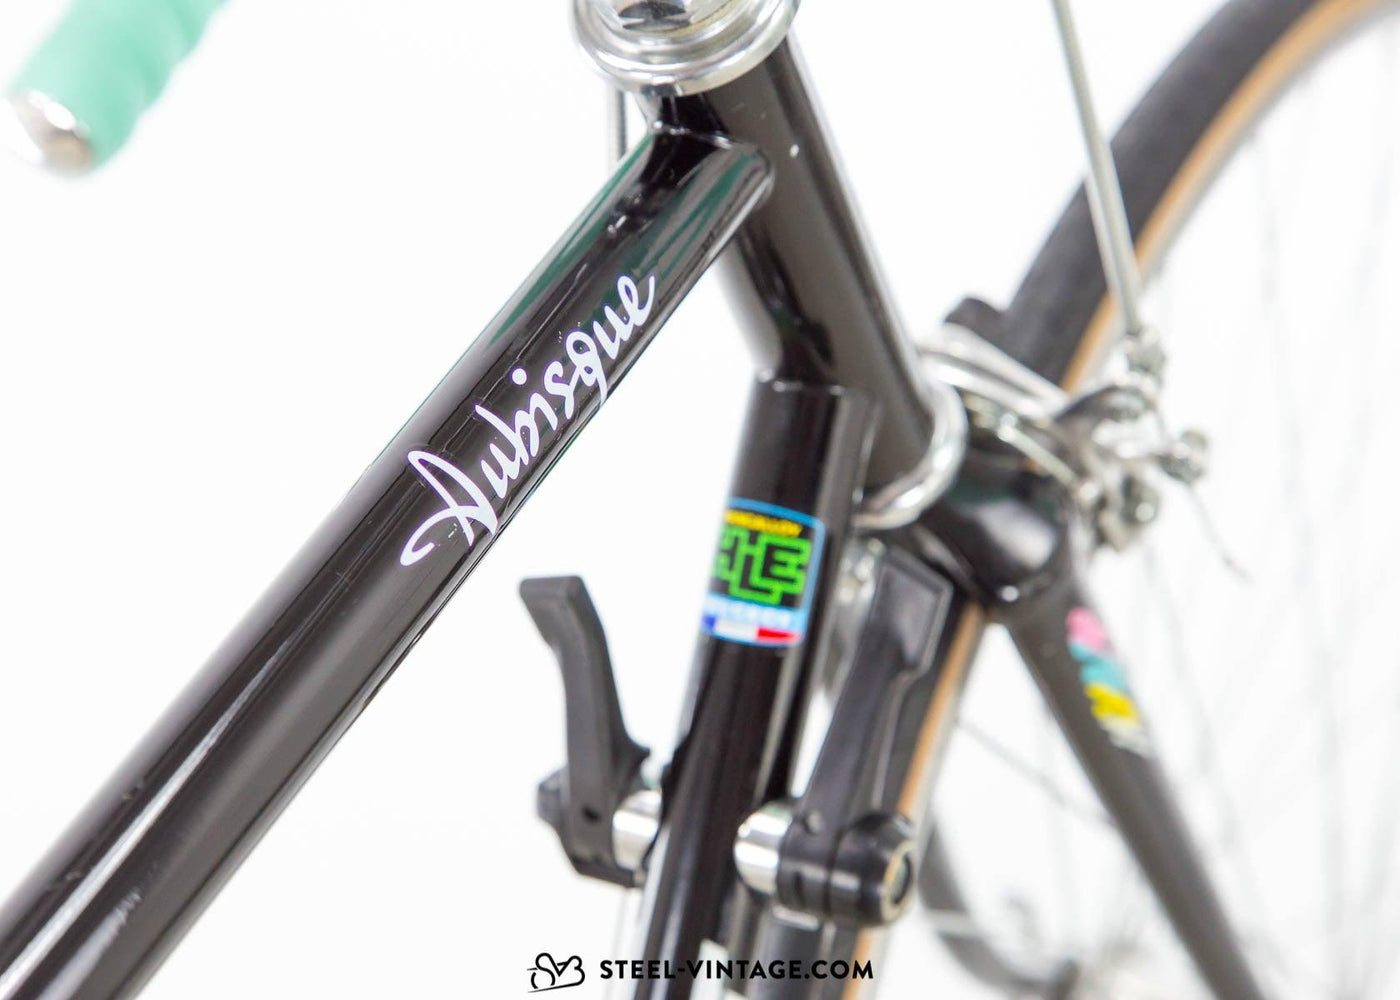 Peugeot Aubisque Classic Road Bike 1990 - Steel Vintage Bikes